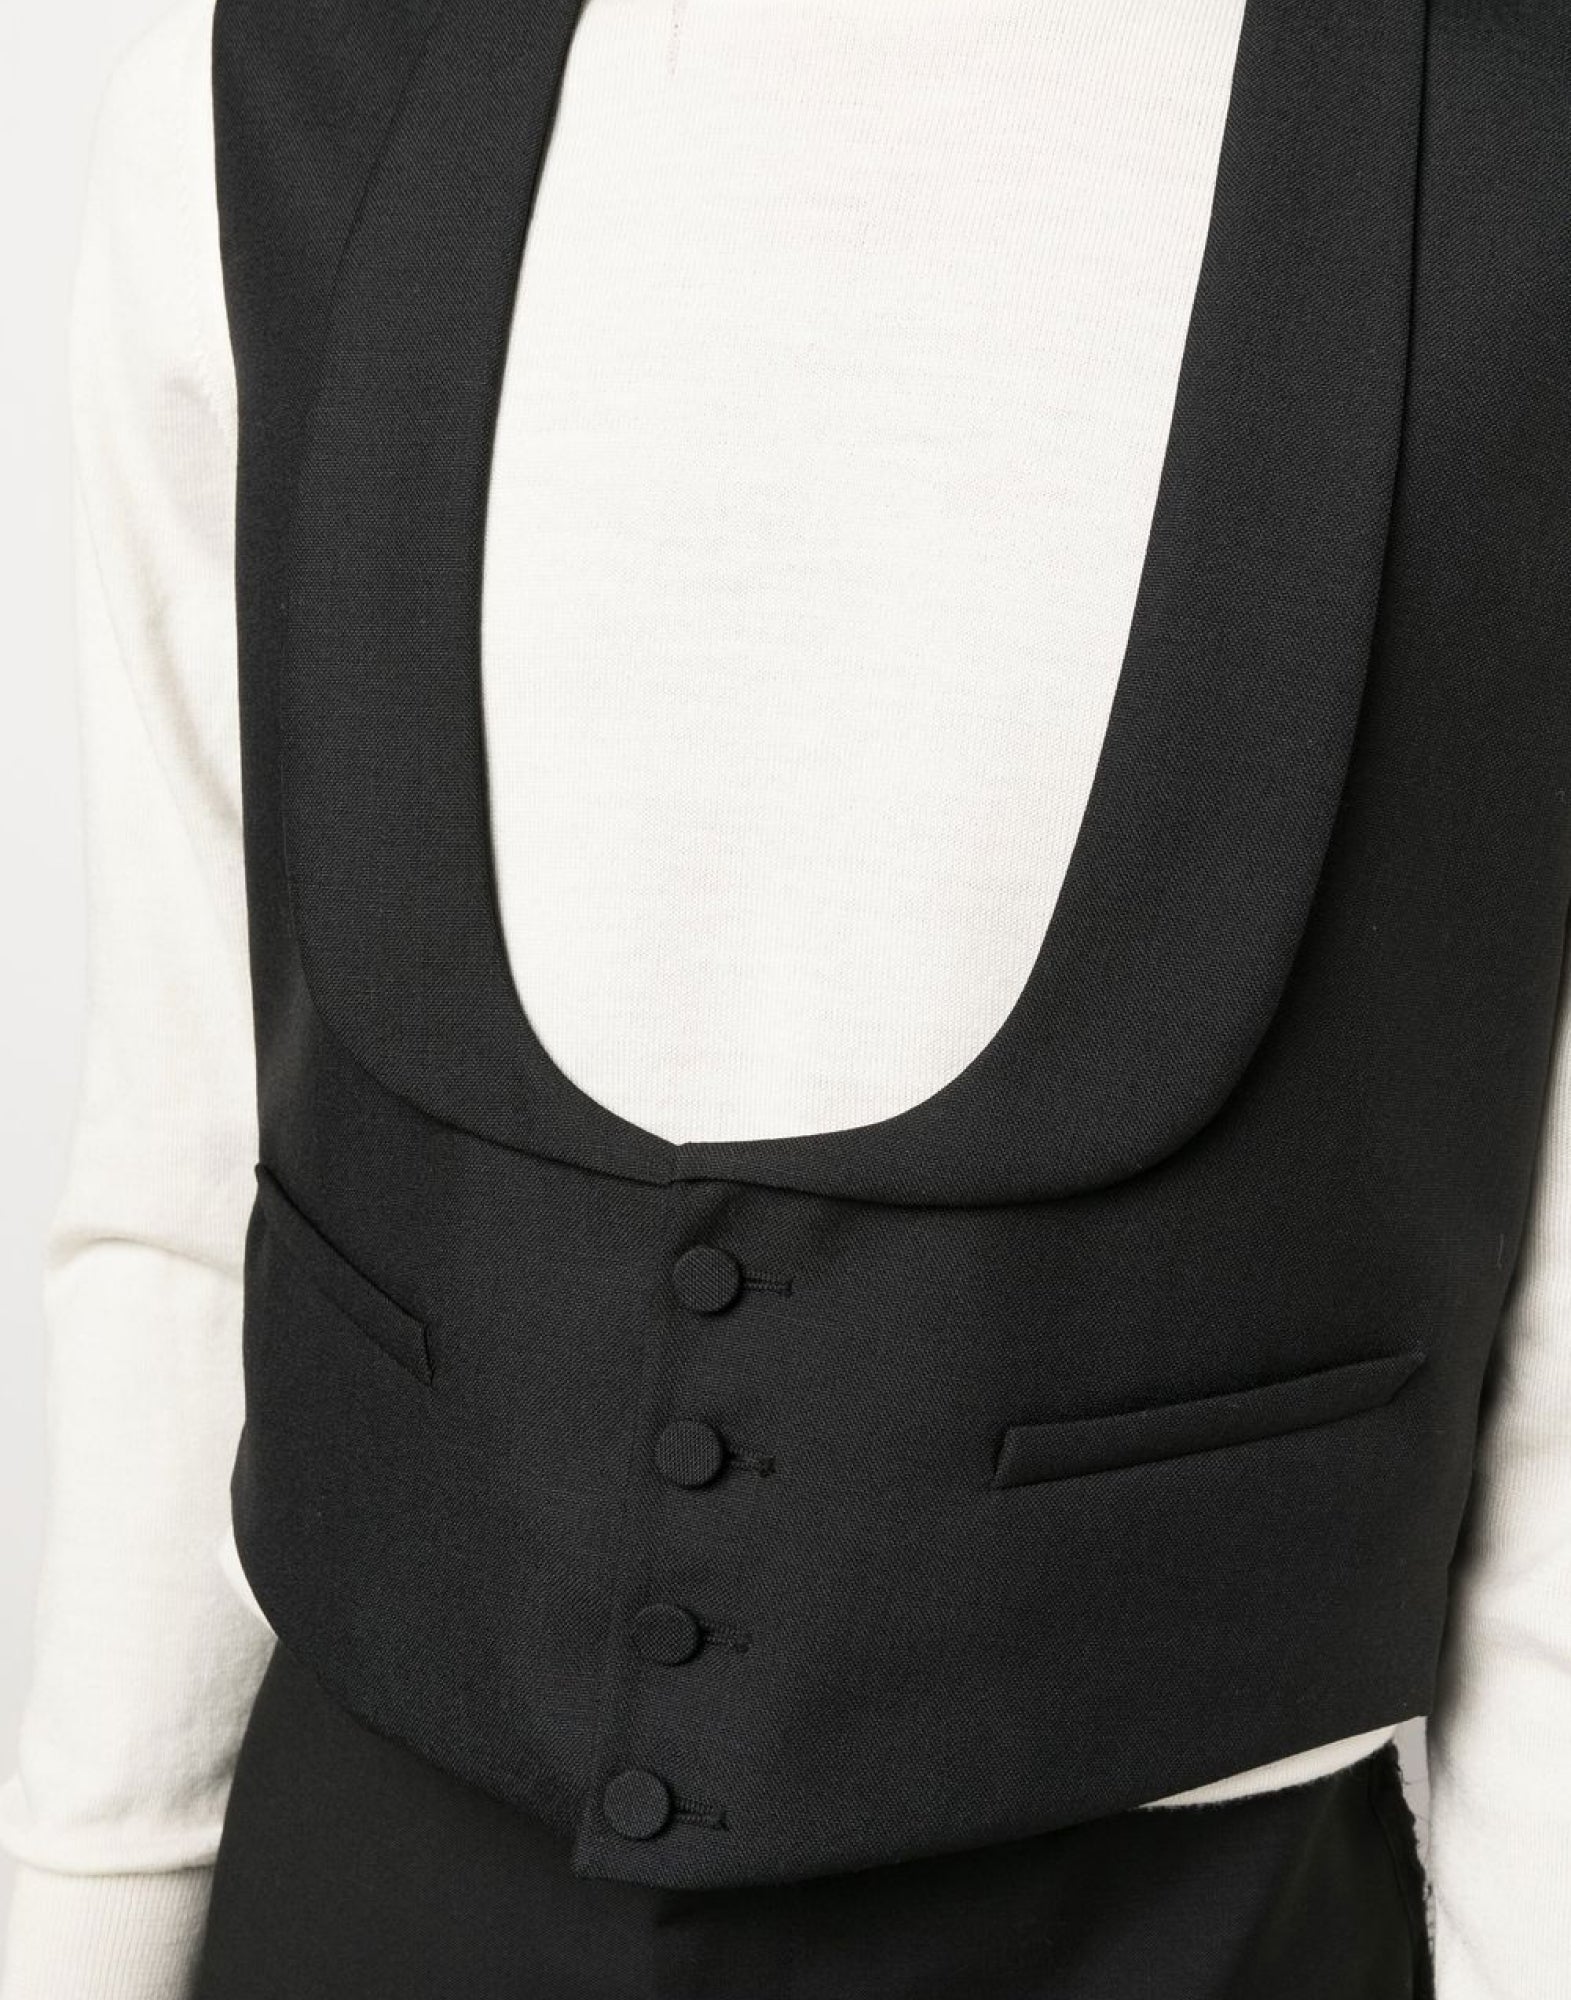 Gucci-OUTLET-SALE-Wool Formal Vest Gilet-ARCHIVIST